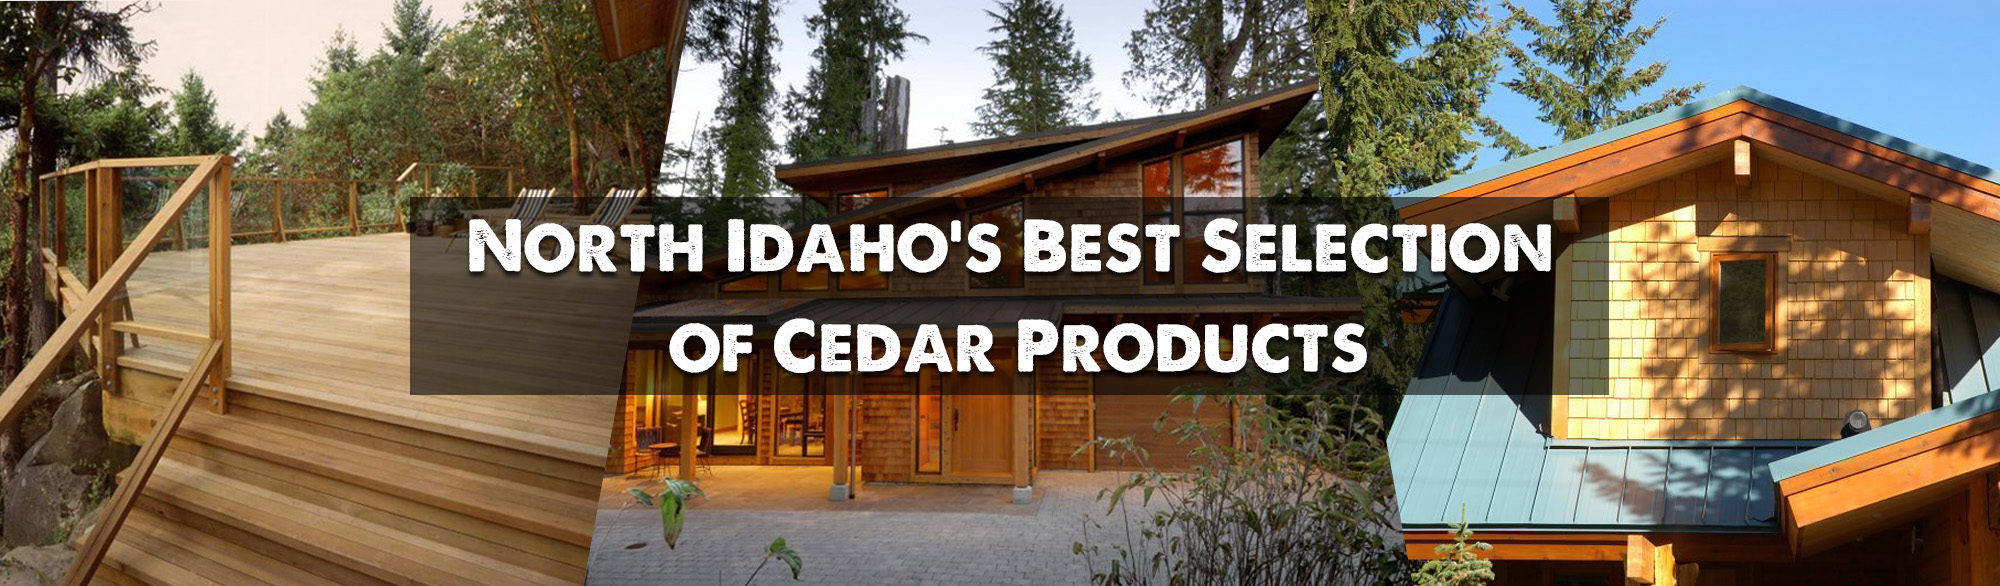 North Idaho's Best Cedar Products